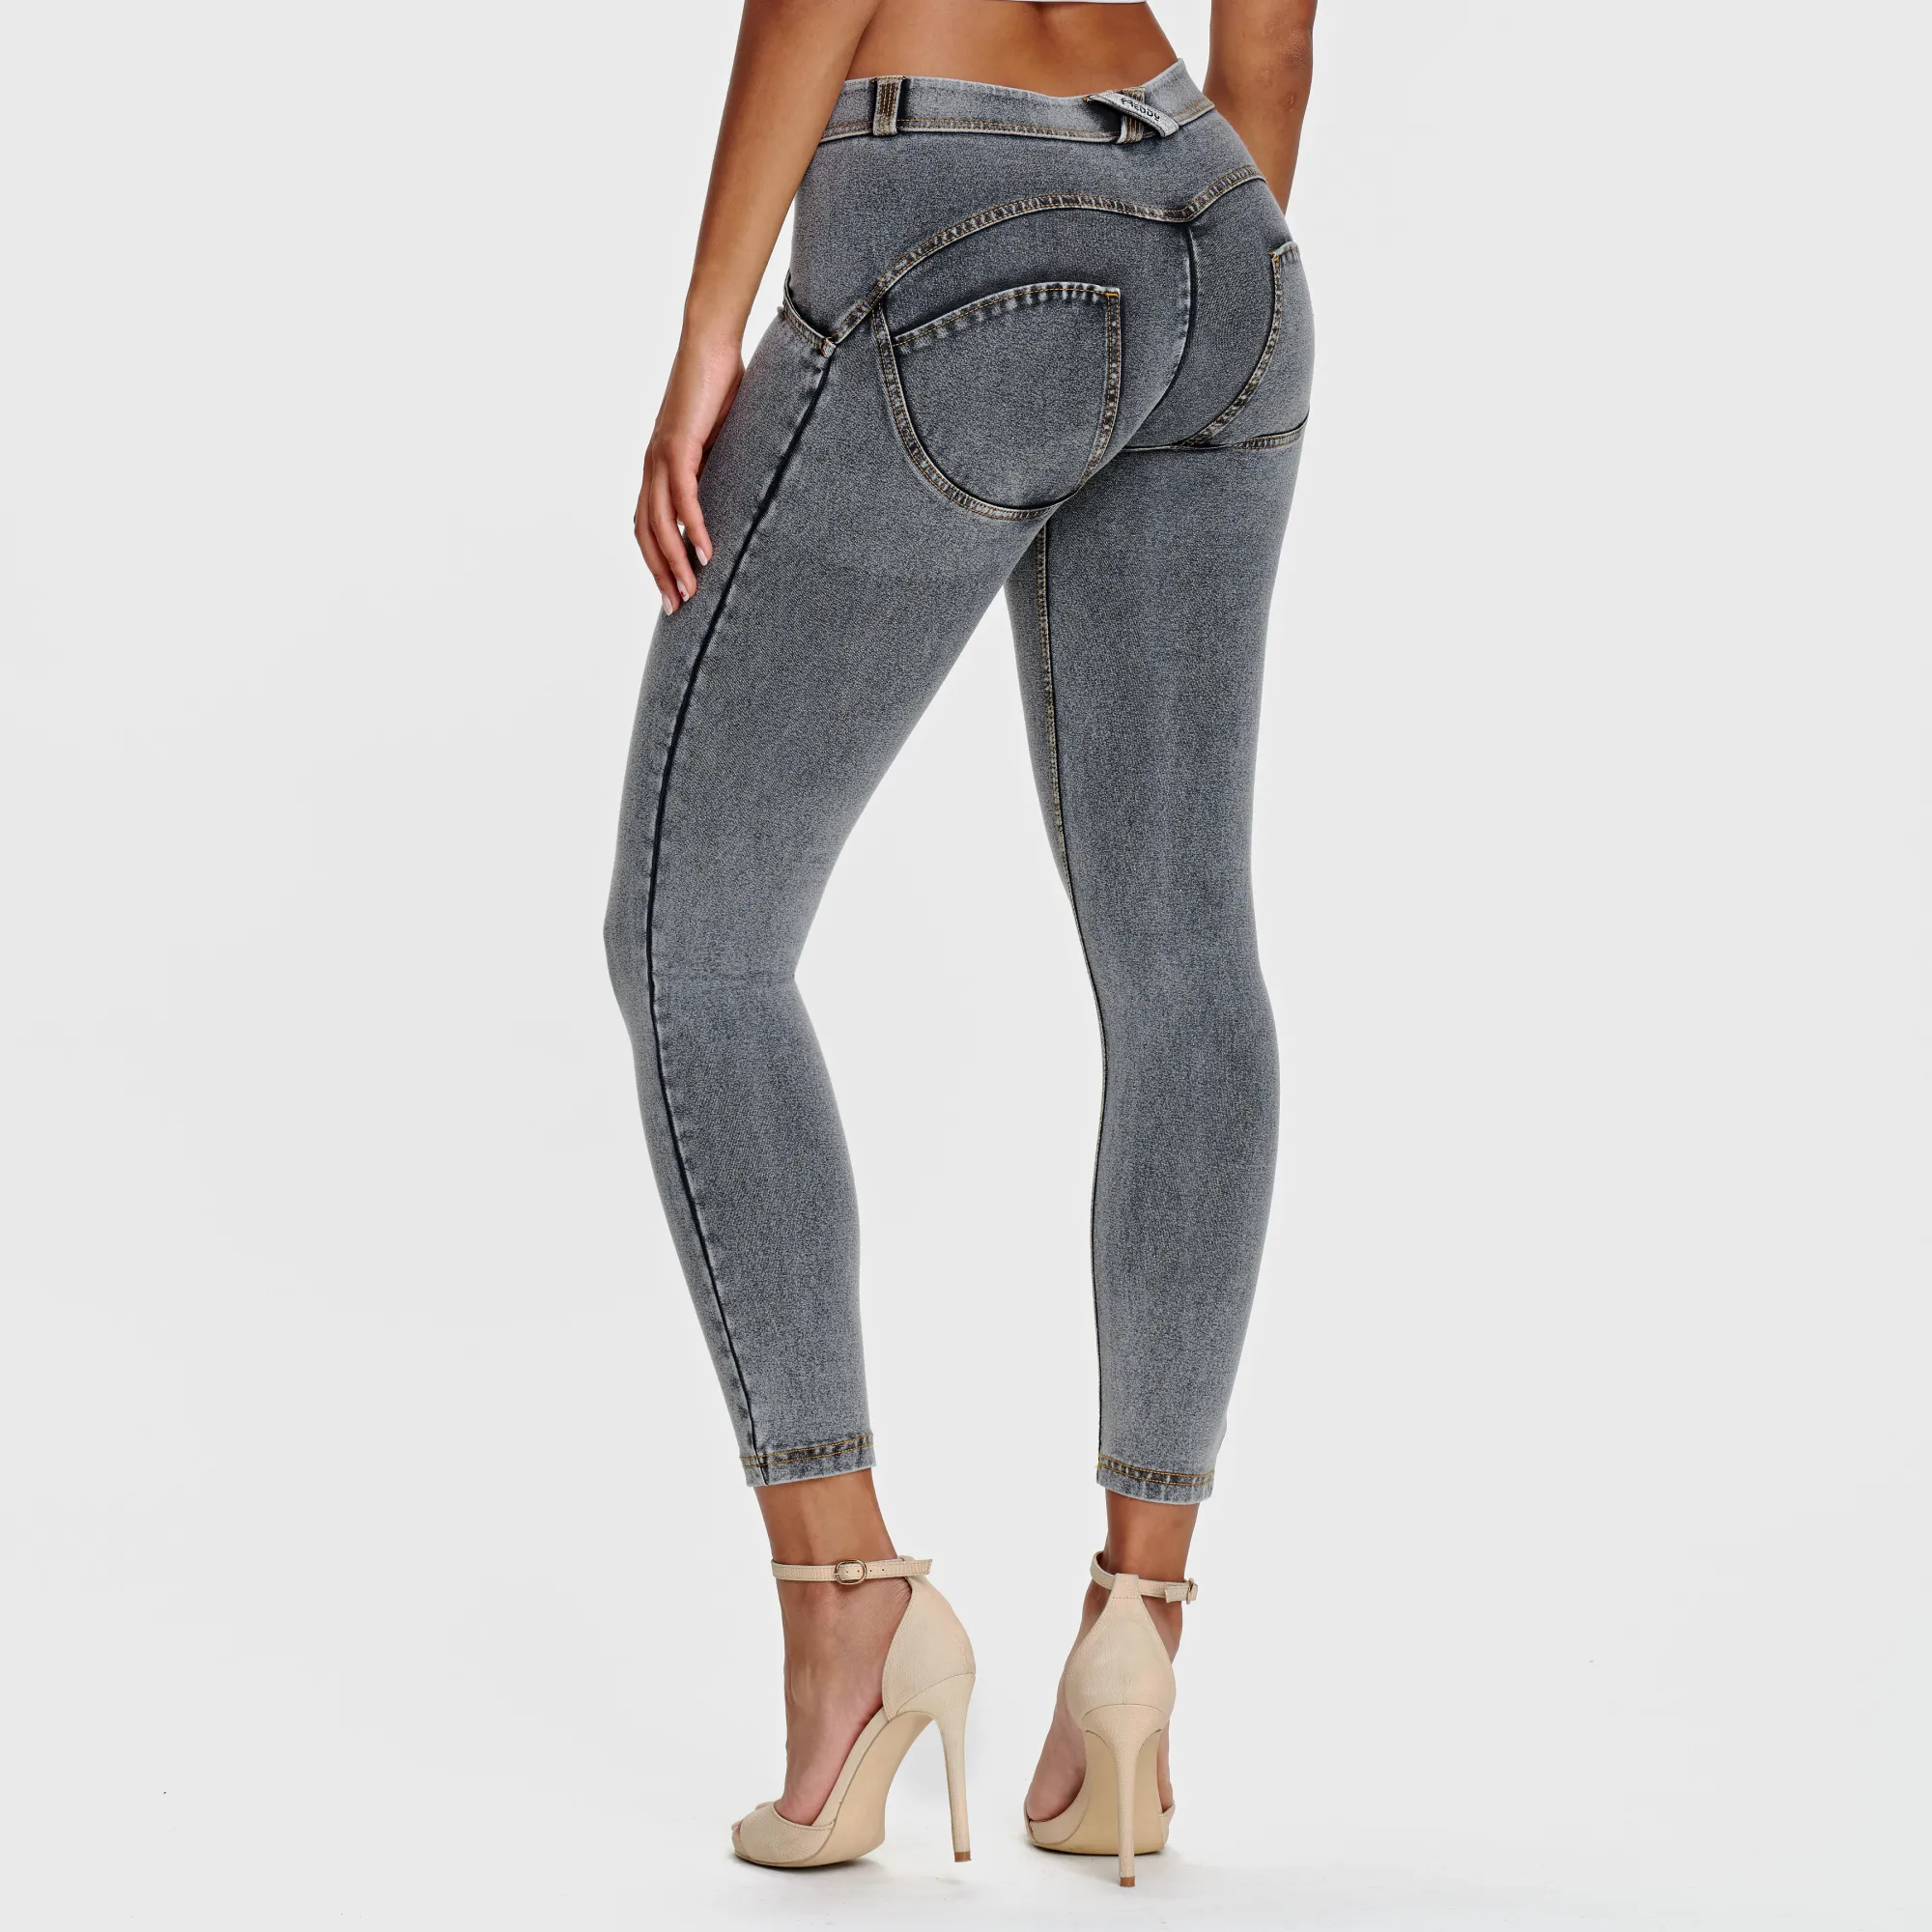 Freddy WR.UP® Damen Push-Up Jeans - 7/8 Regular Waist Super Skinny - Grau - Gelbe Nähte